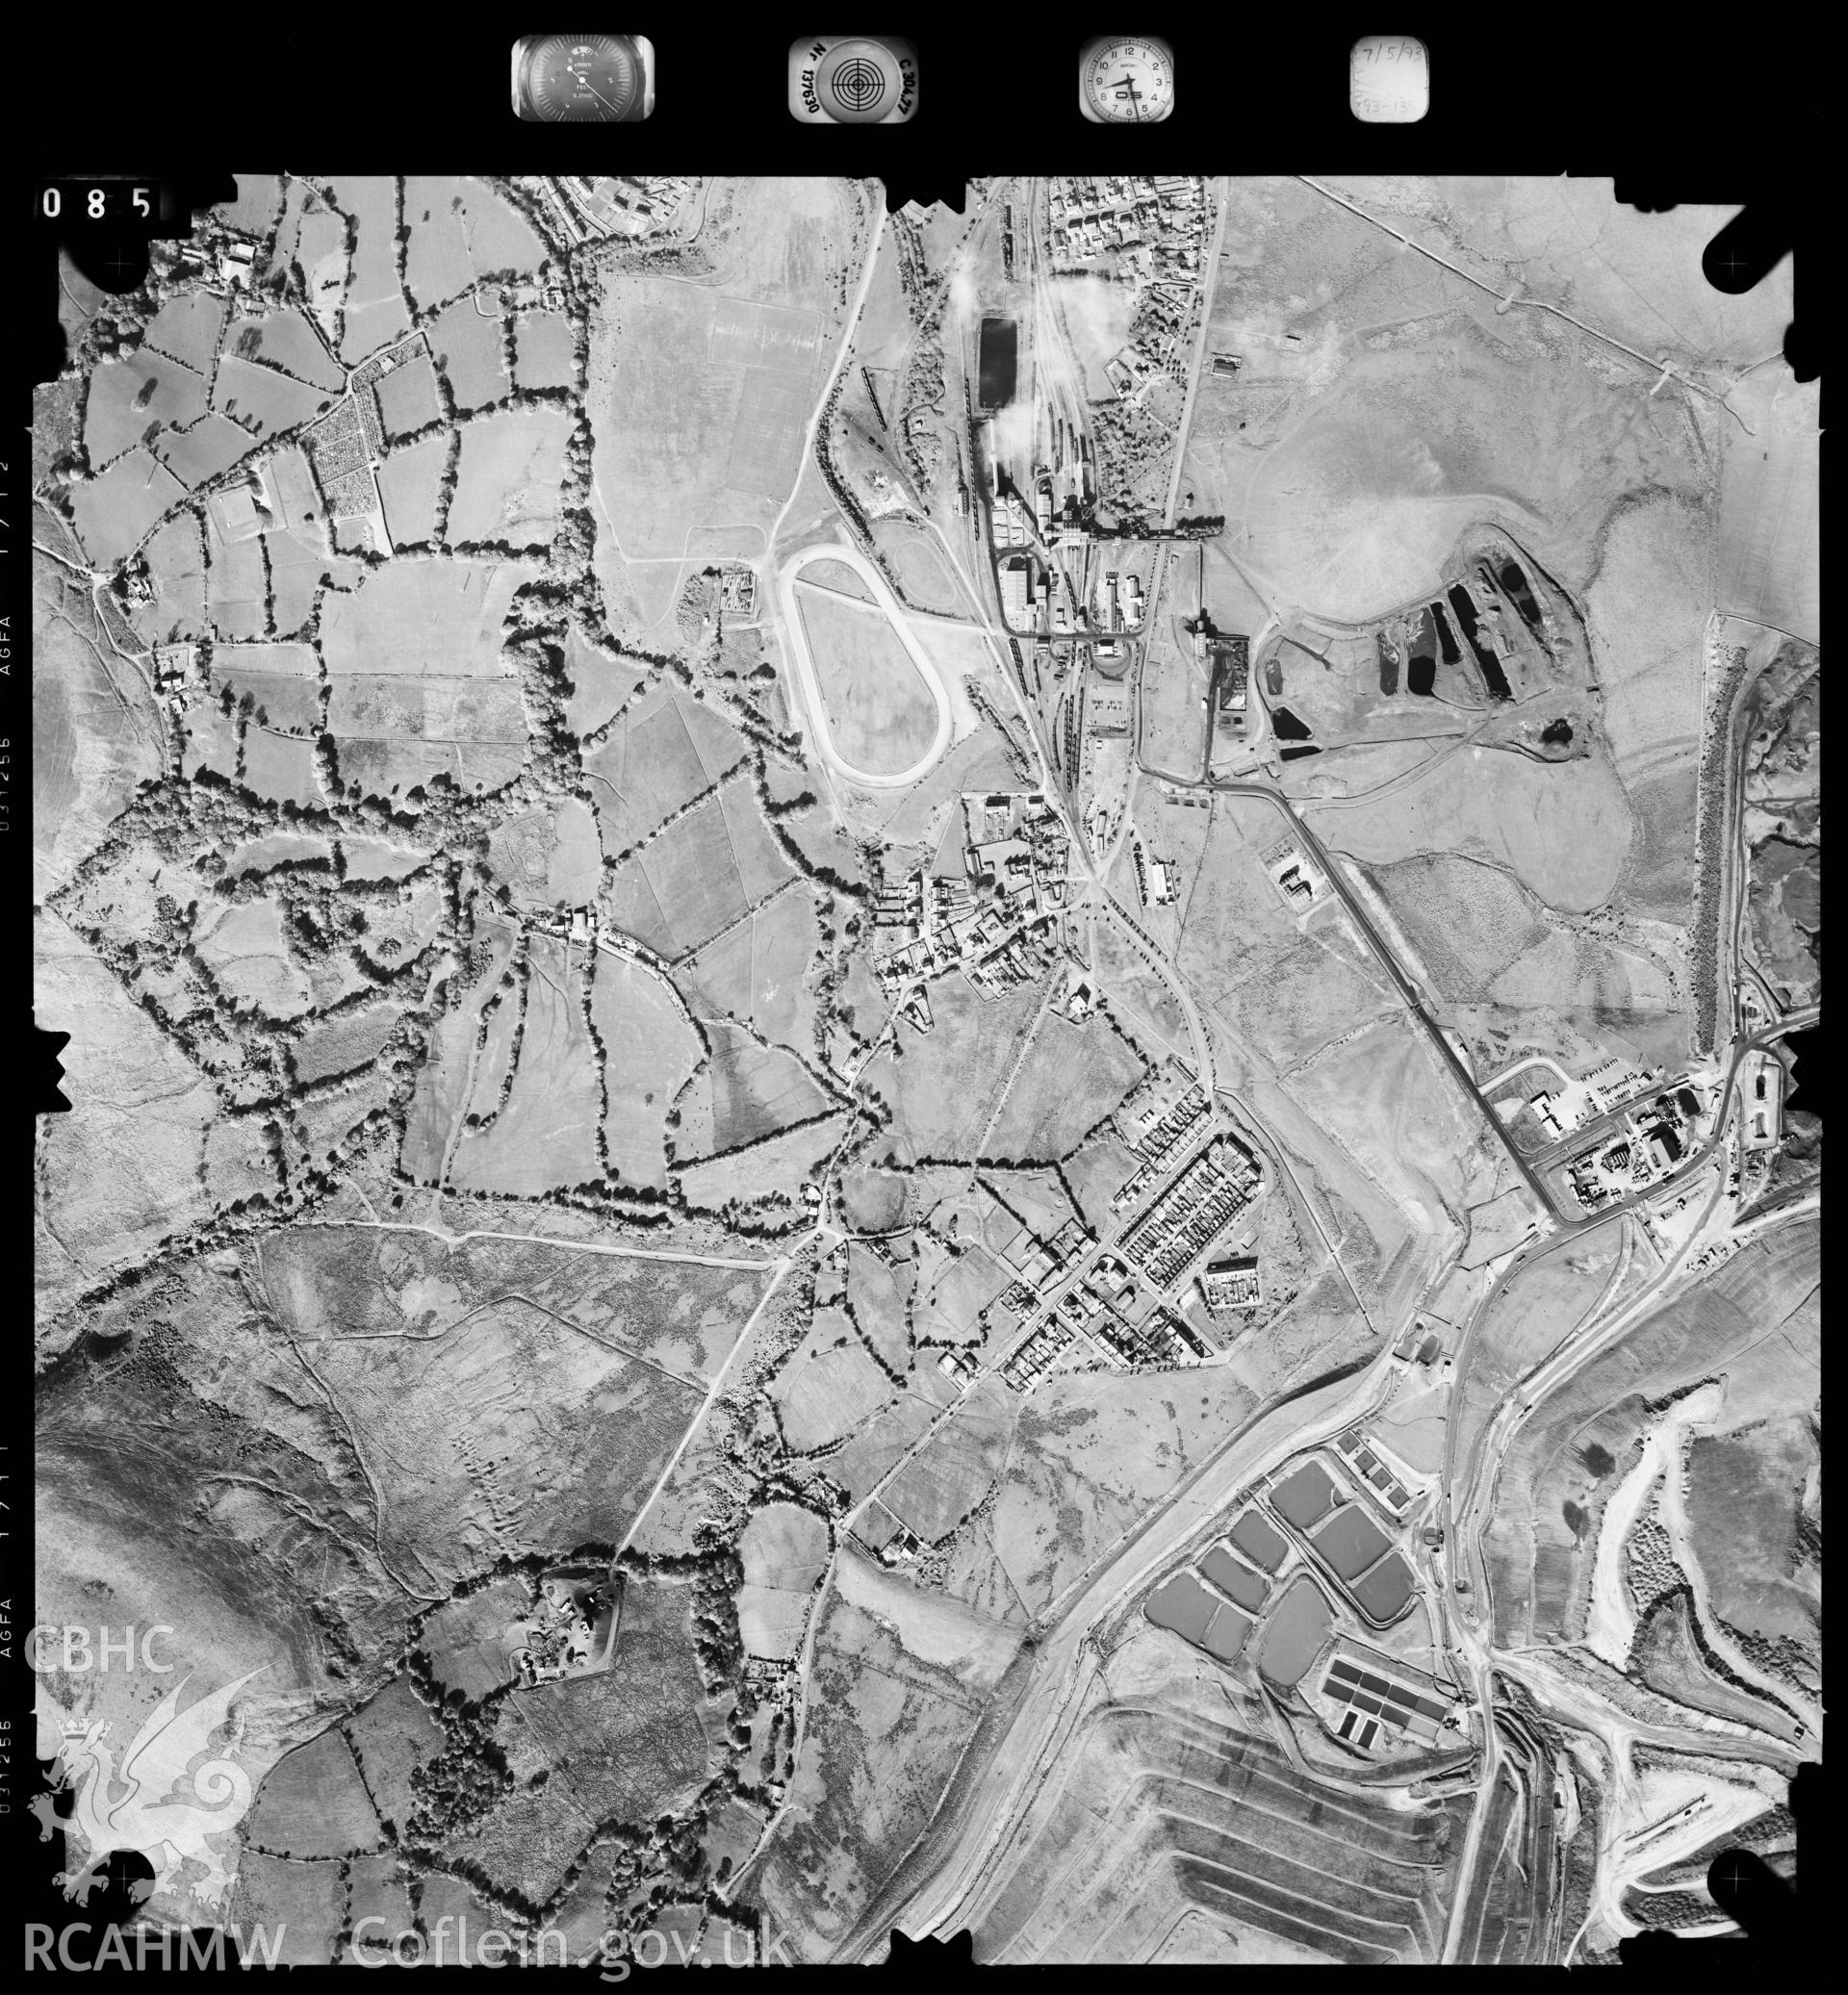 Digitized copy of an aerial photograph showing the Gwauncaegurwen area, taken by Ordnance Survey, 1993.